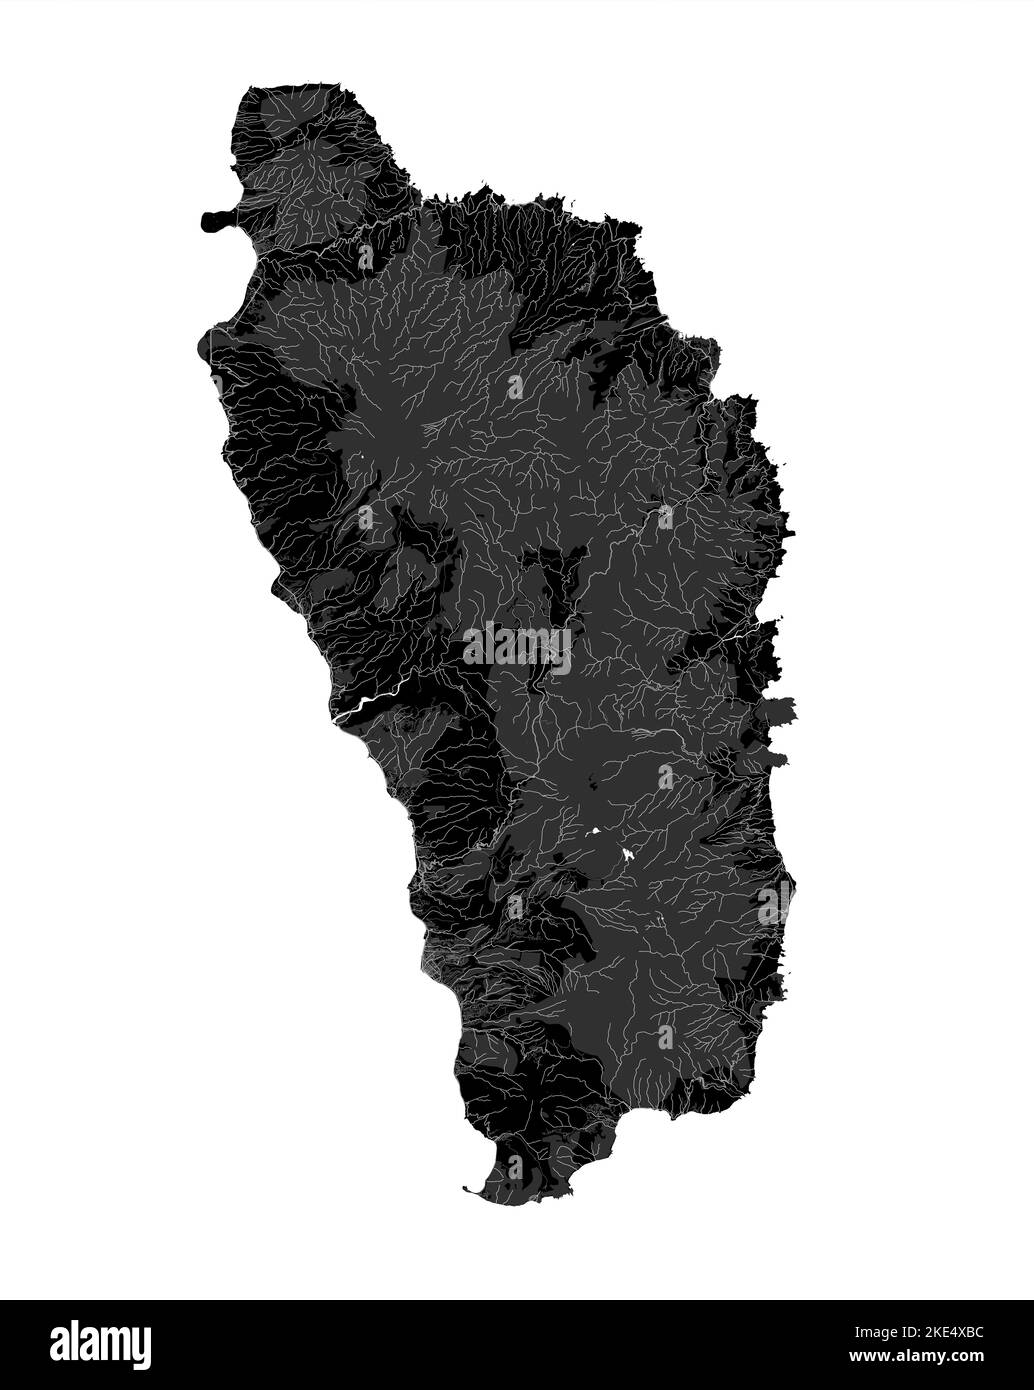 Dominica-Karte, schwarz-weiß Stock Vektor